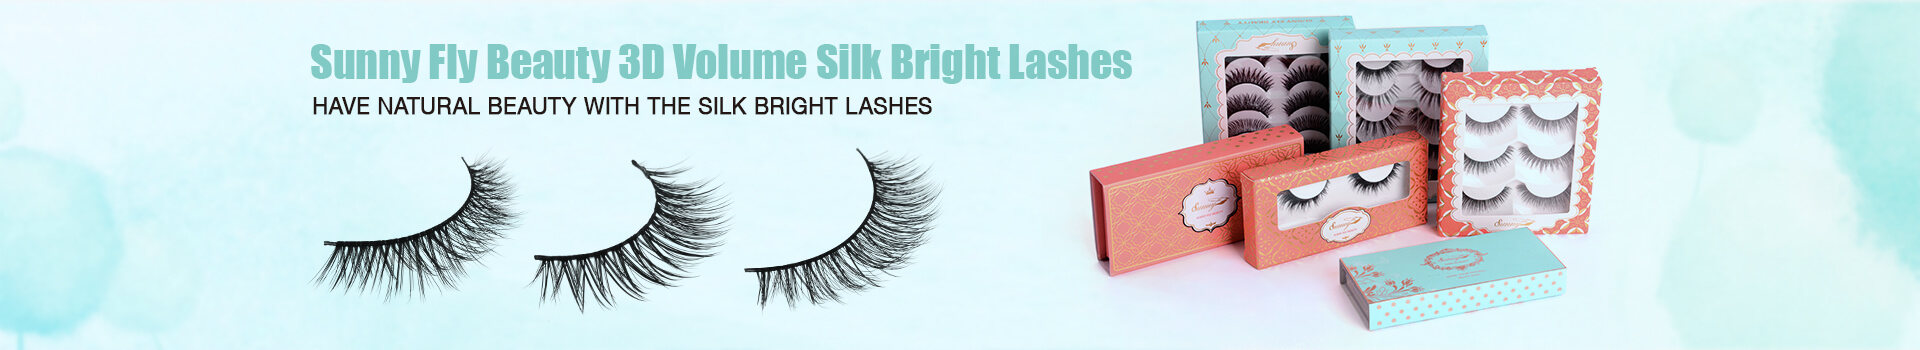 3D Volume Silk Bright Eyelashes FA19